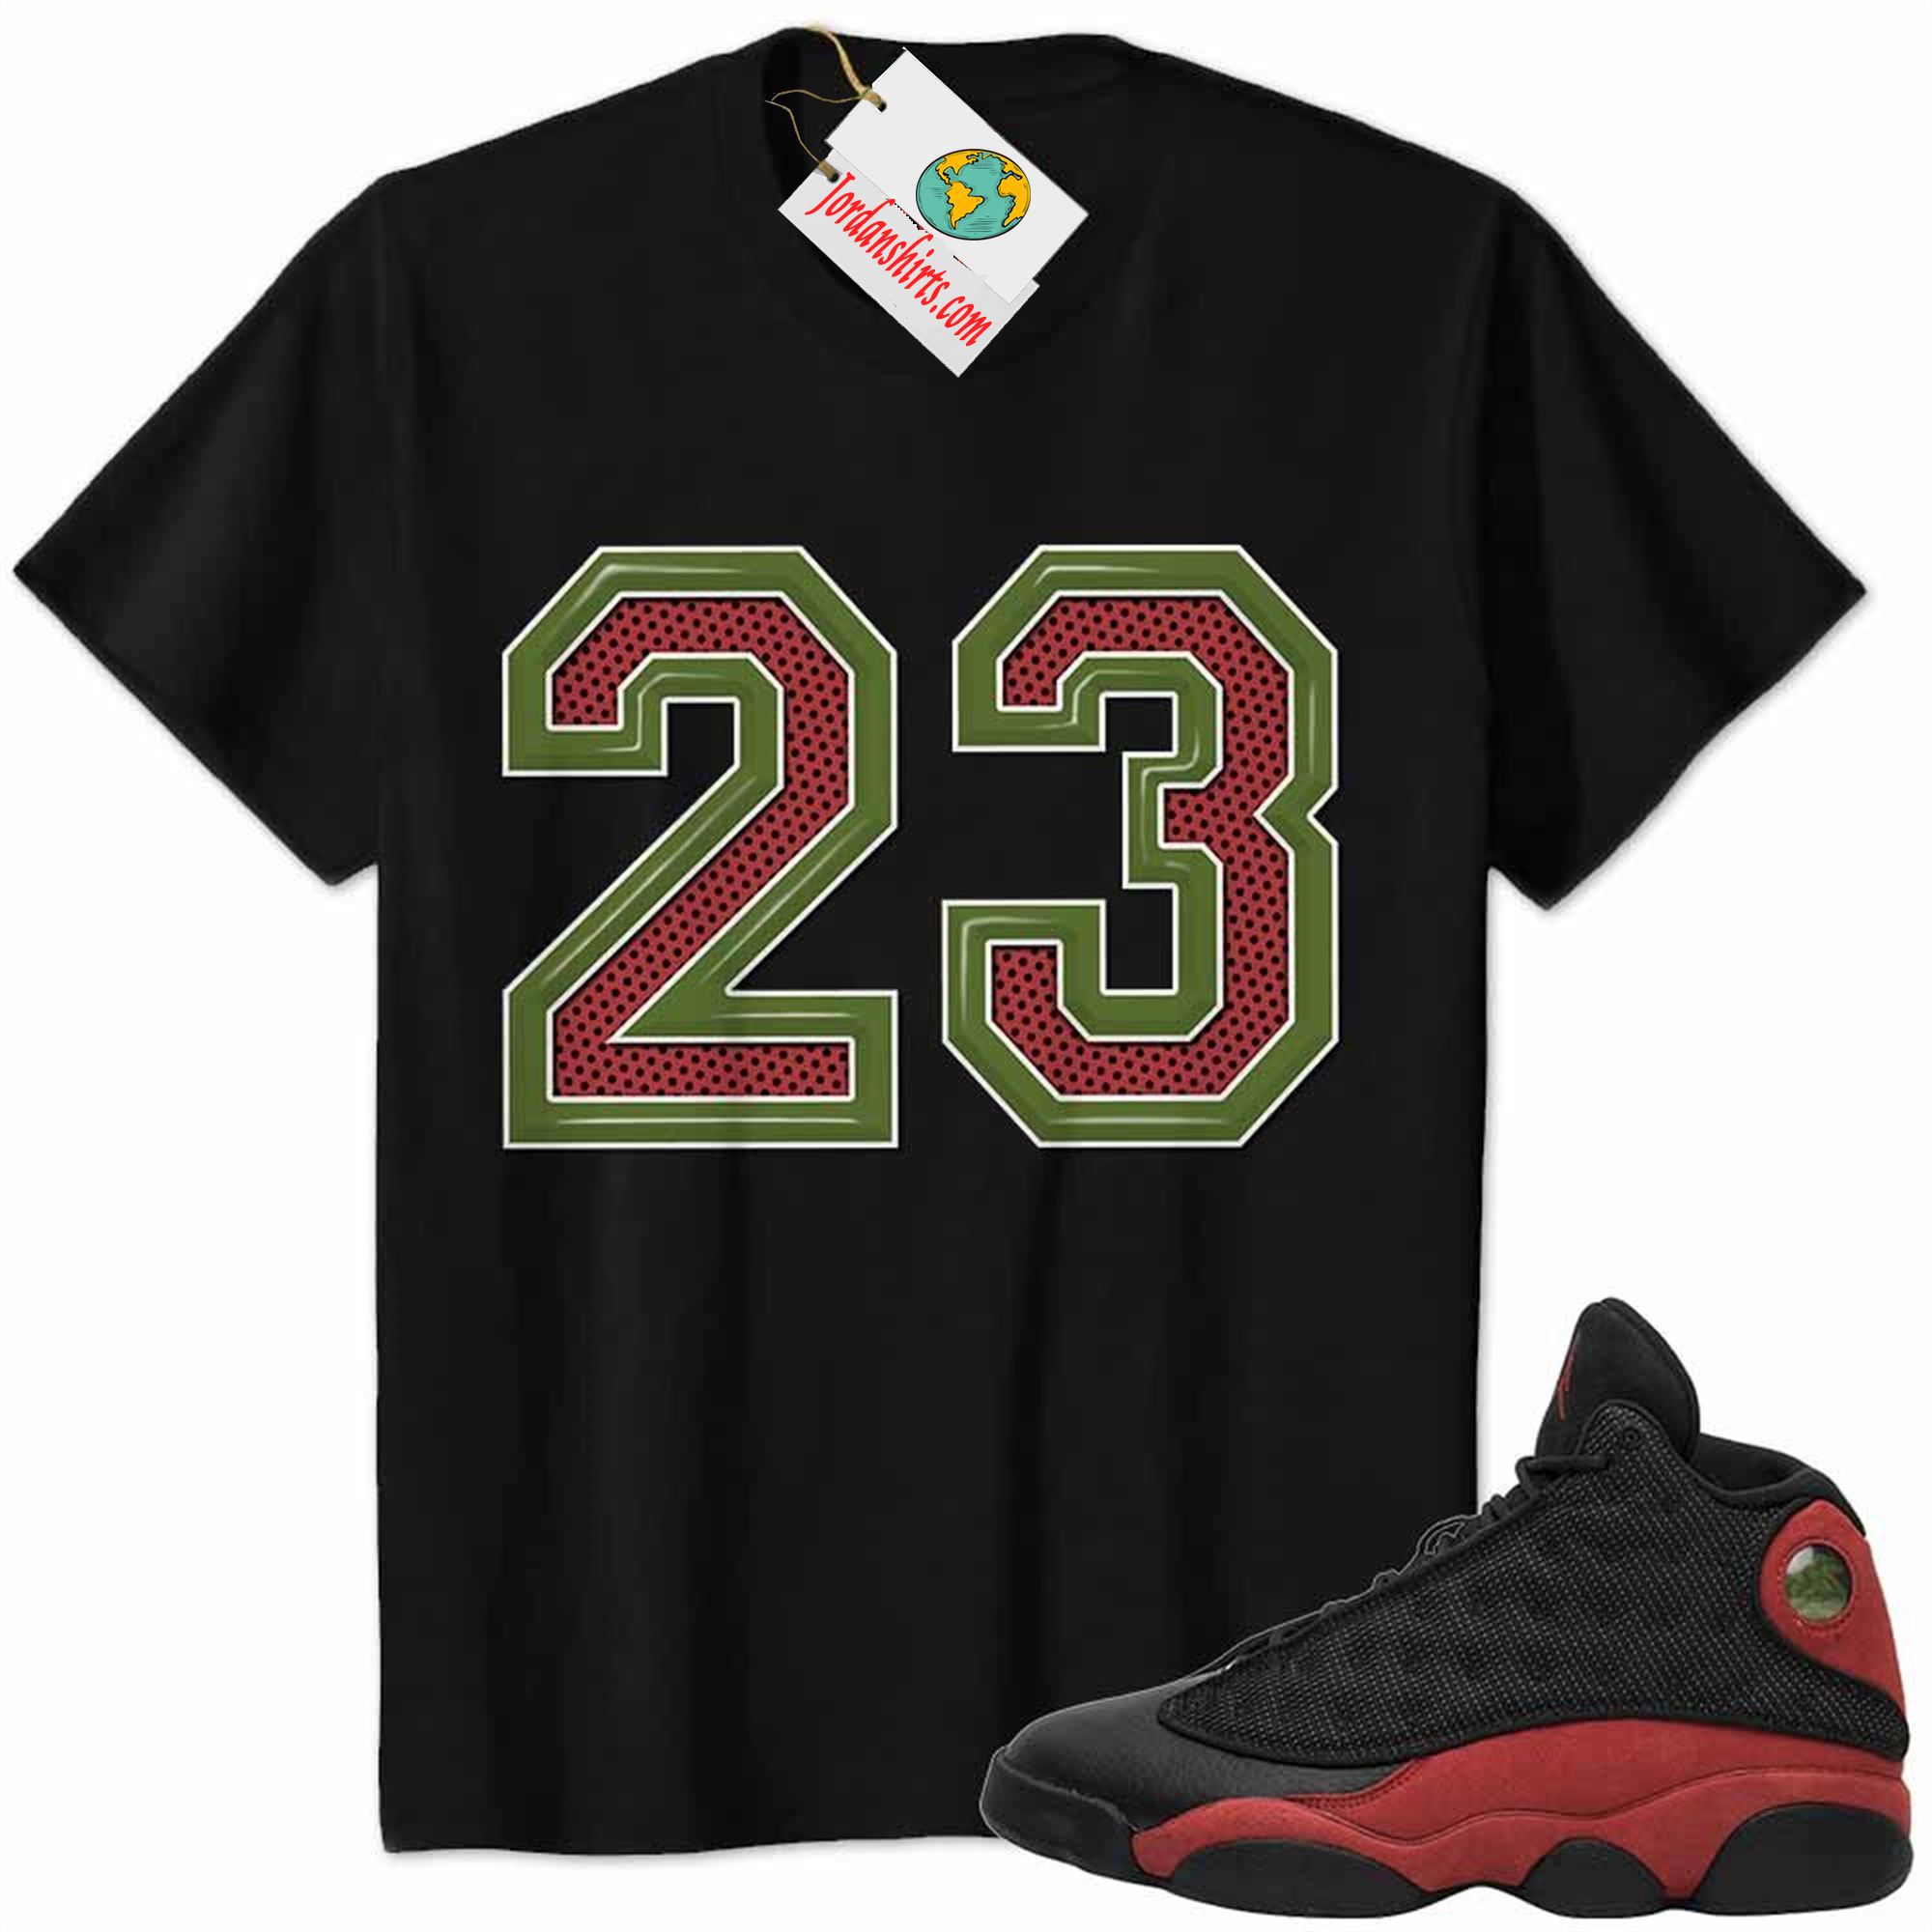 Jordan 13 Shirt, Jordan 13 Bred Shirt Michael Jordan Number 23 Black Size Up To 5xl